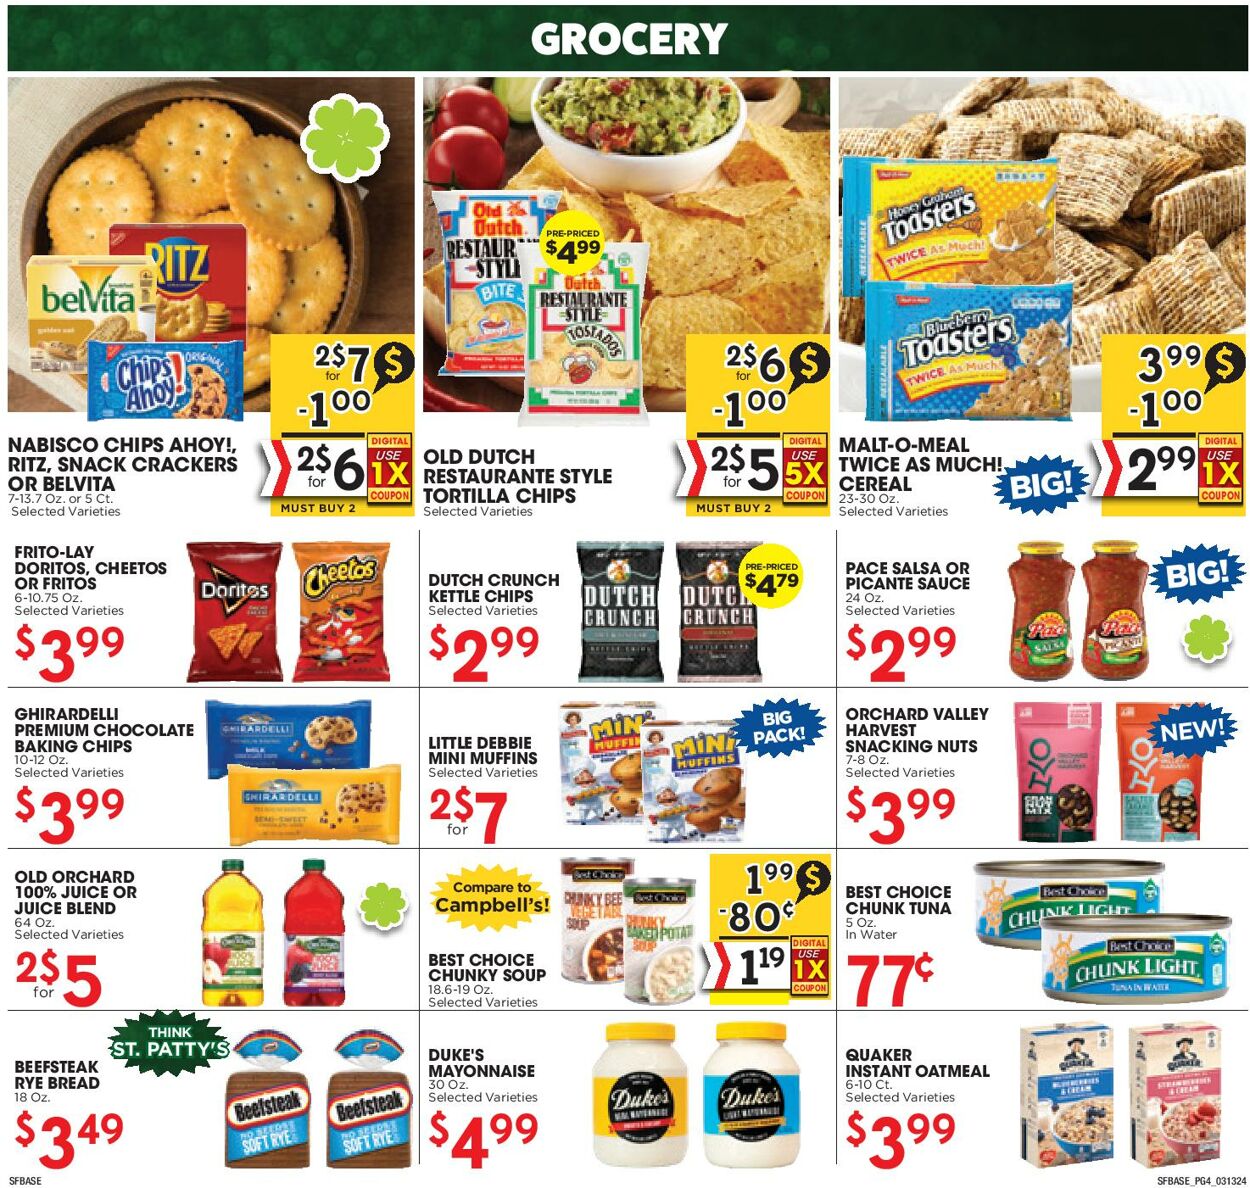 Weekly ad Sunshine Foods 03/13/2024 - 03/19/2024